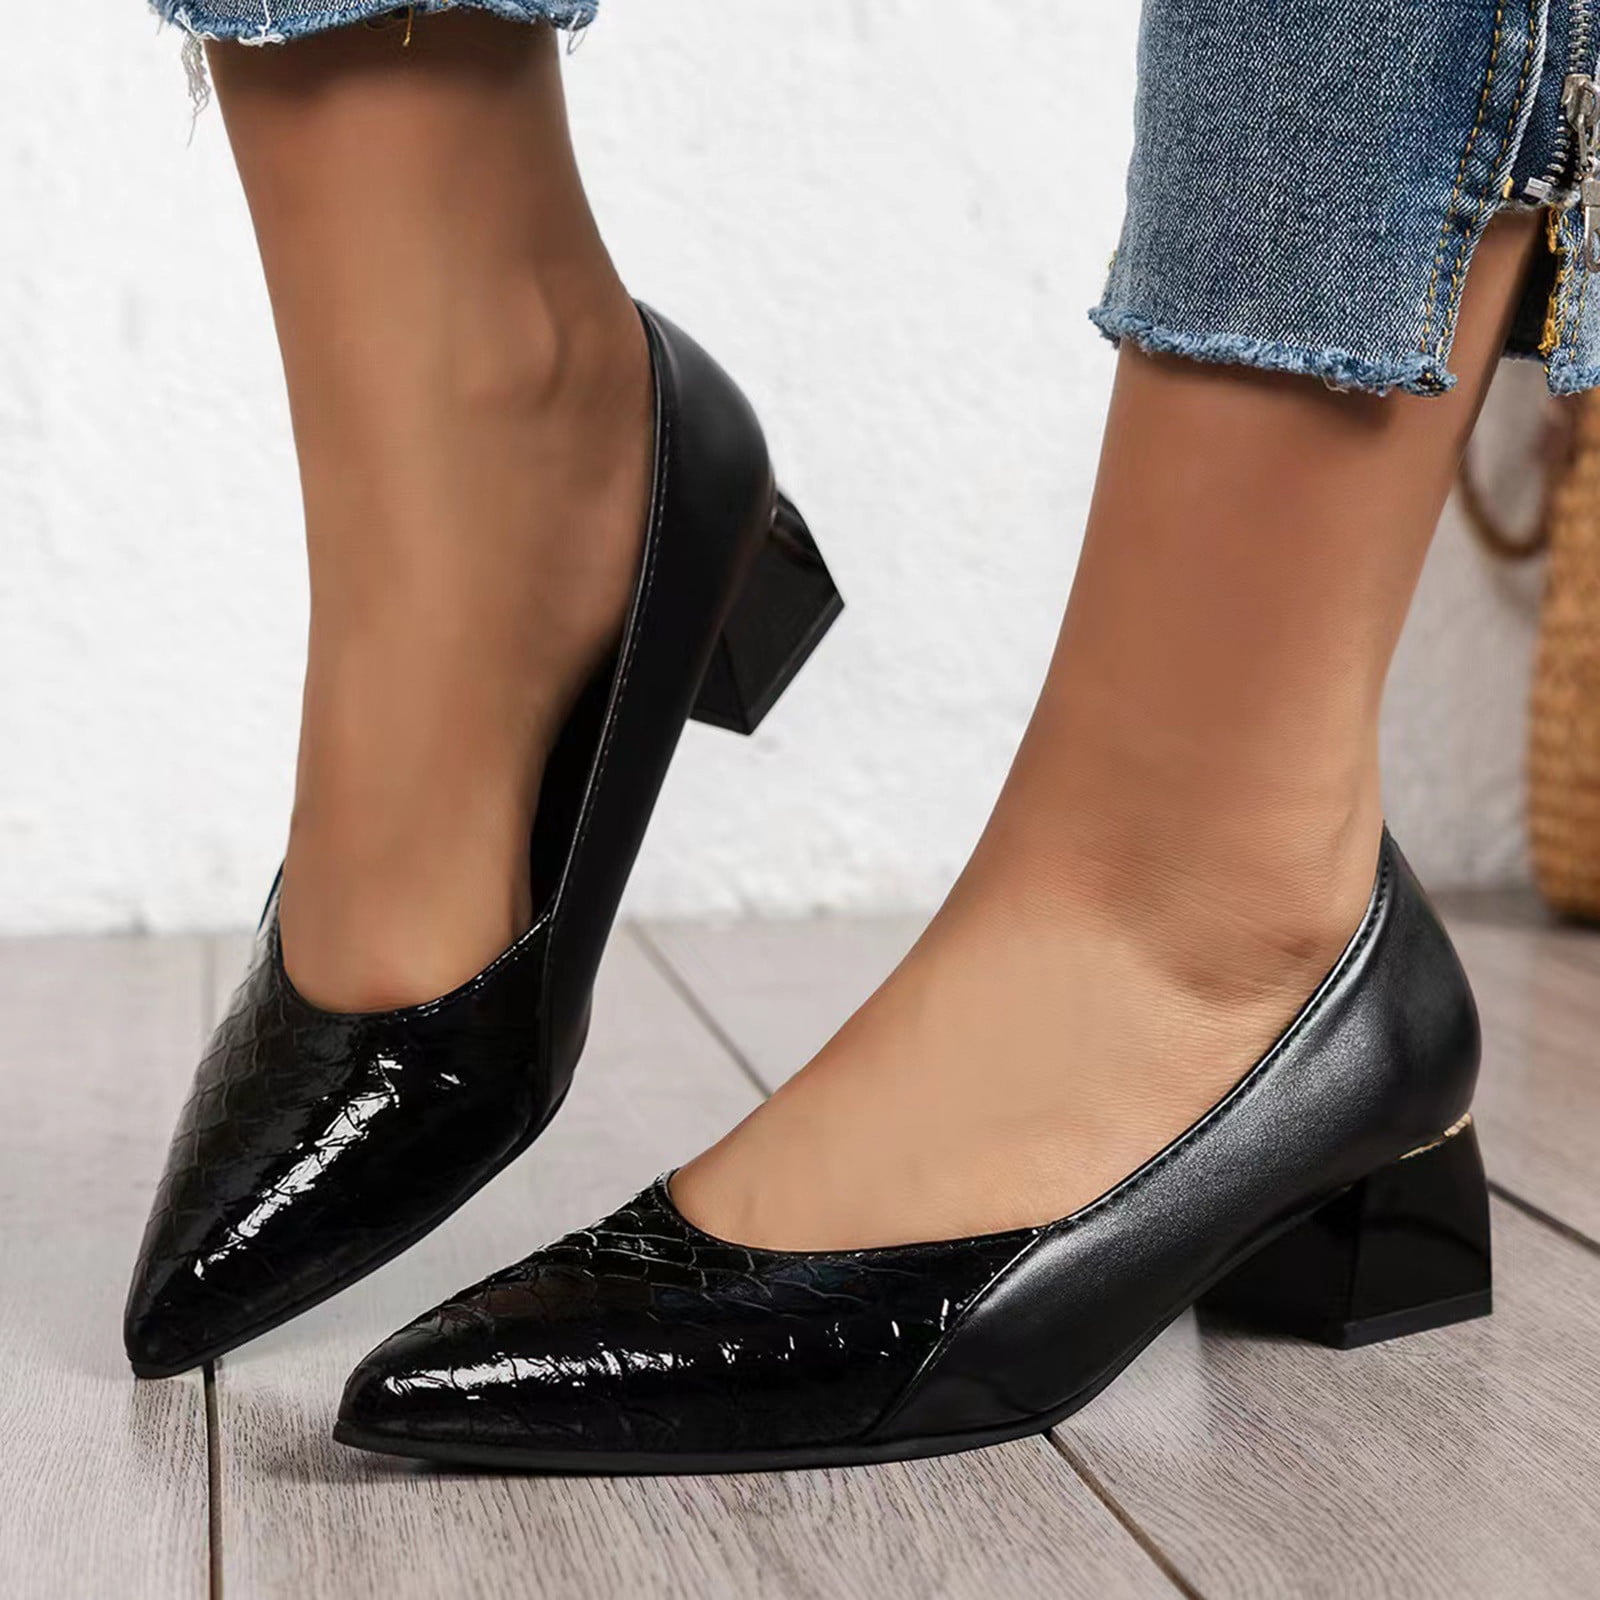 ladies low heel dress shoes